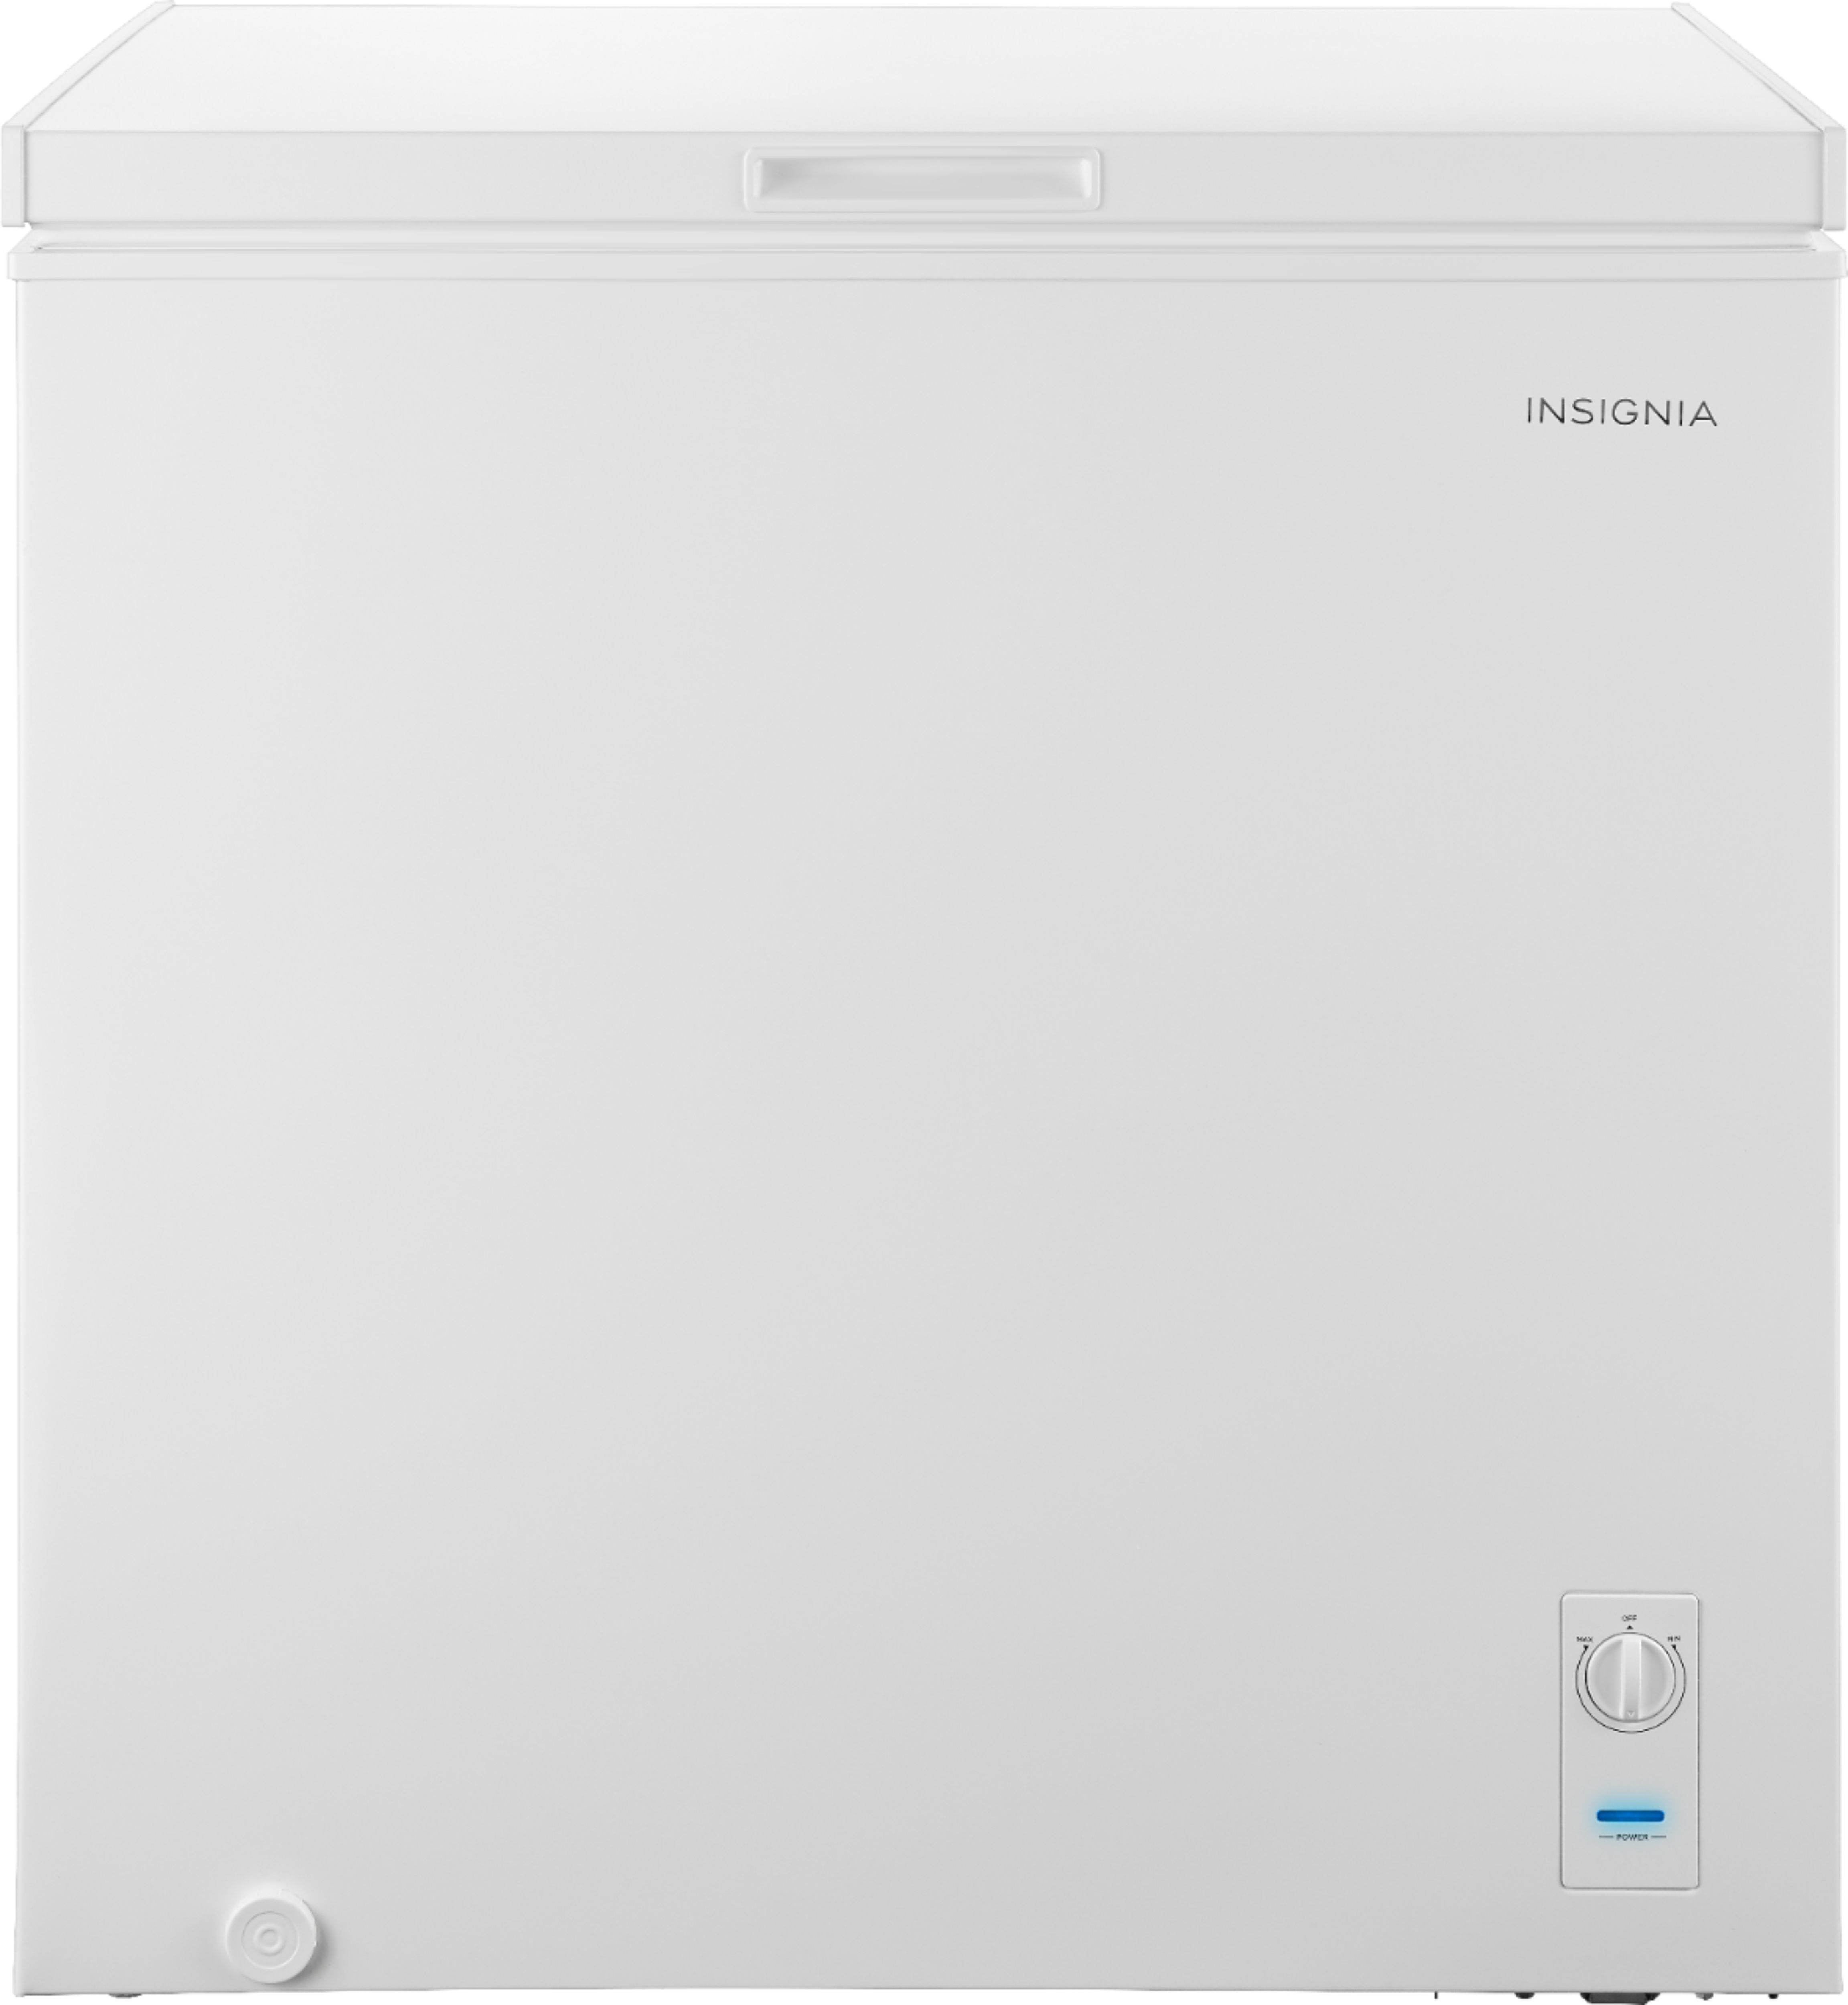 Insignia™ 7.0 Cu. Ft. Chest Freezer White NS-CZ70WH0 - Best Buy | Best Buy U.S.